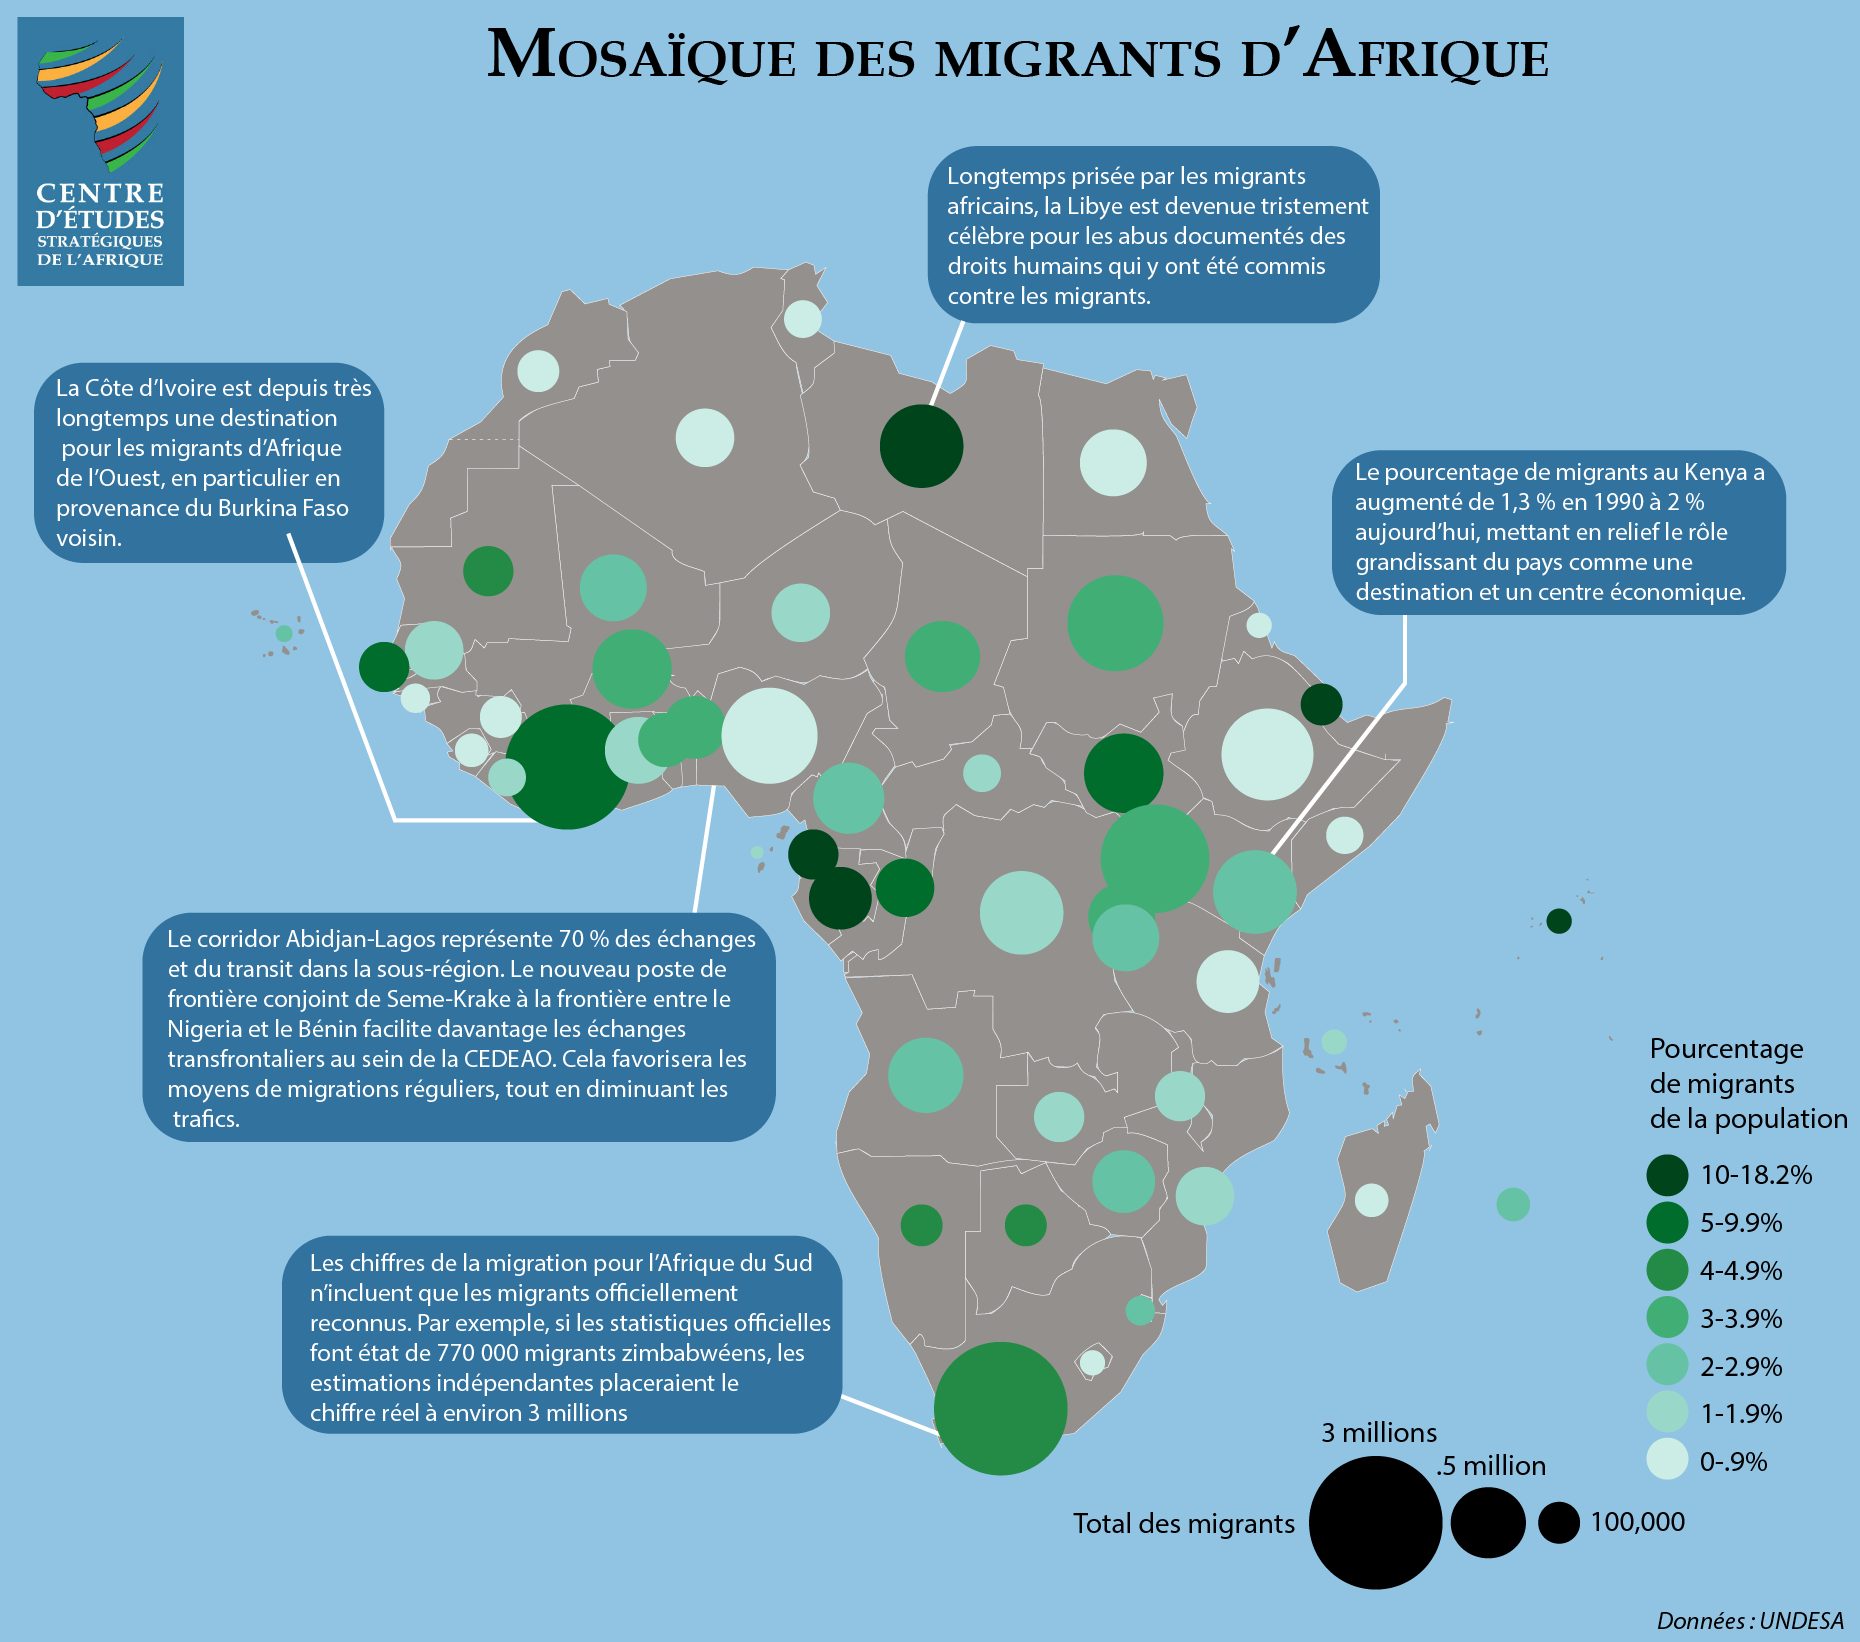 A Mosaic of Migrants